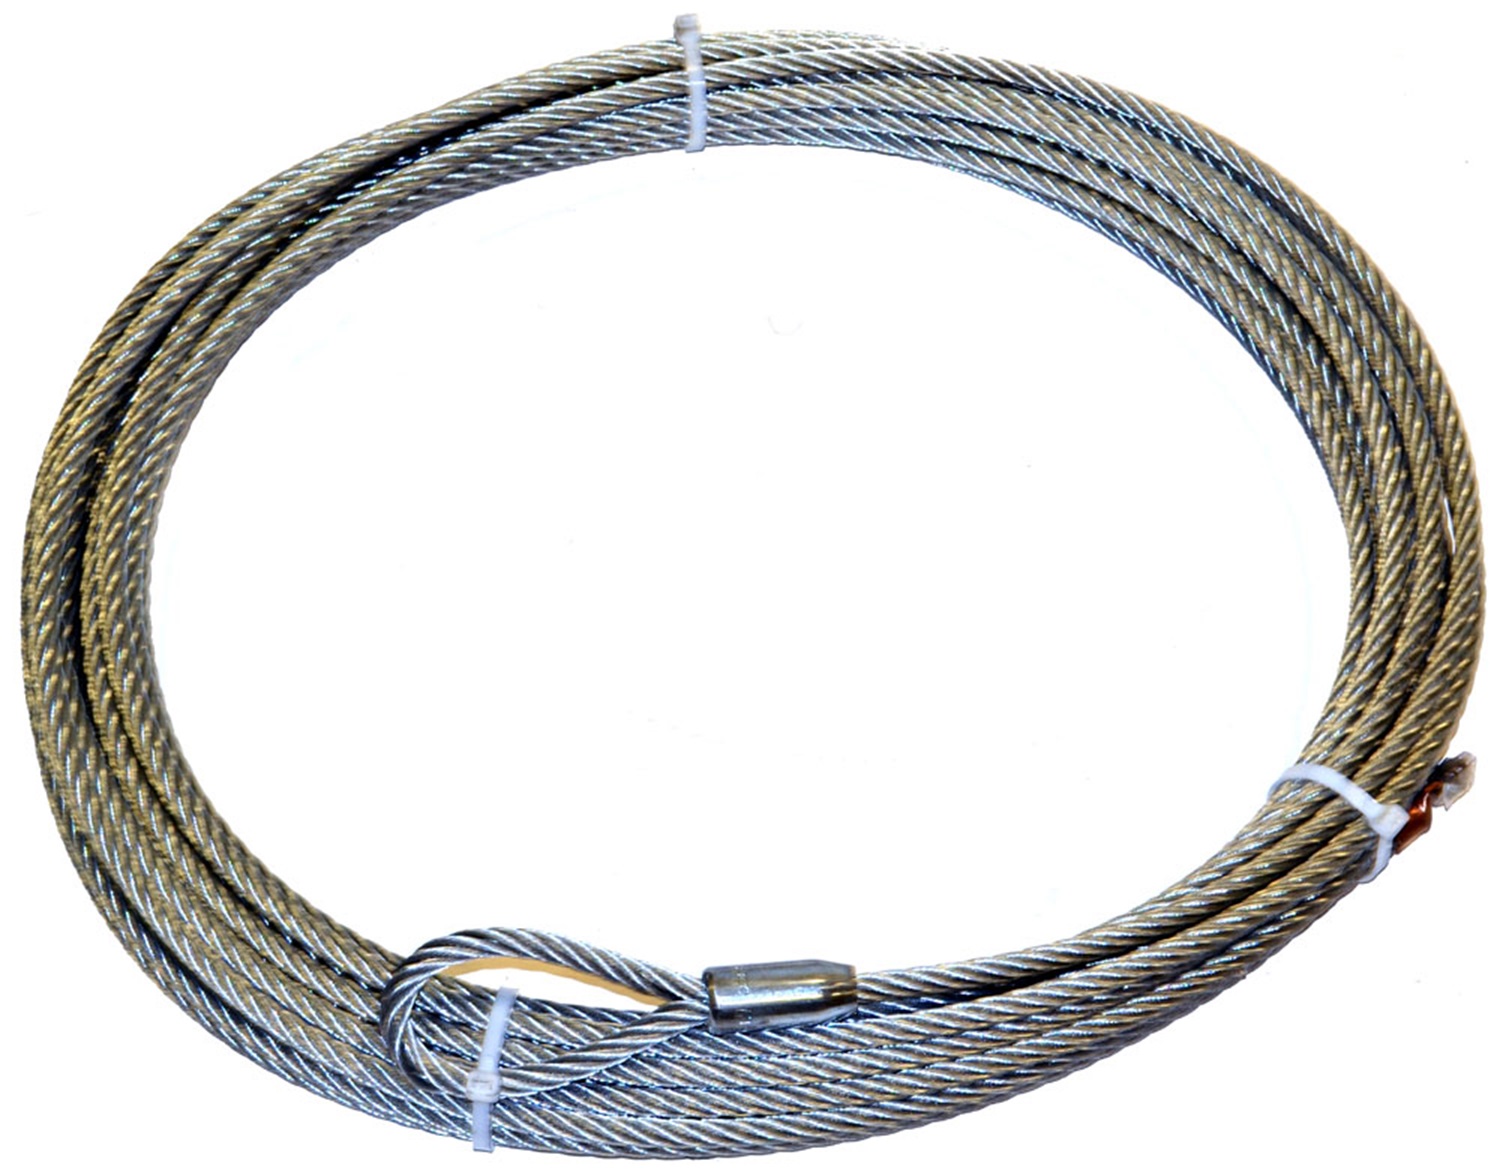 Warn Warn 61950 Wire Rope